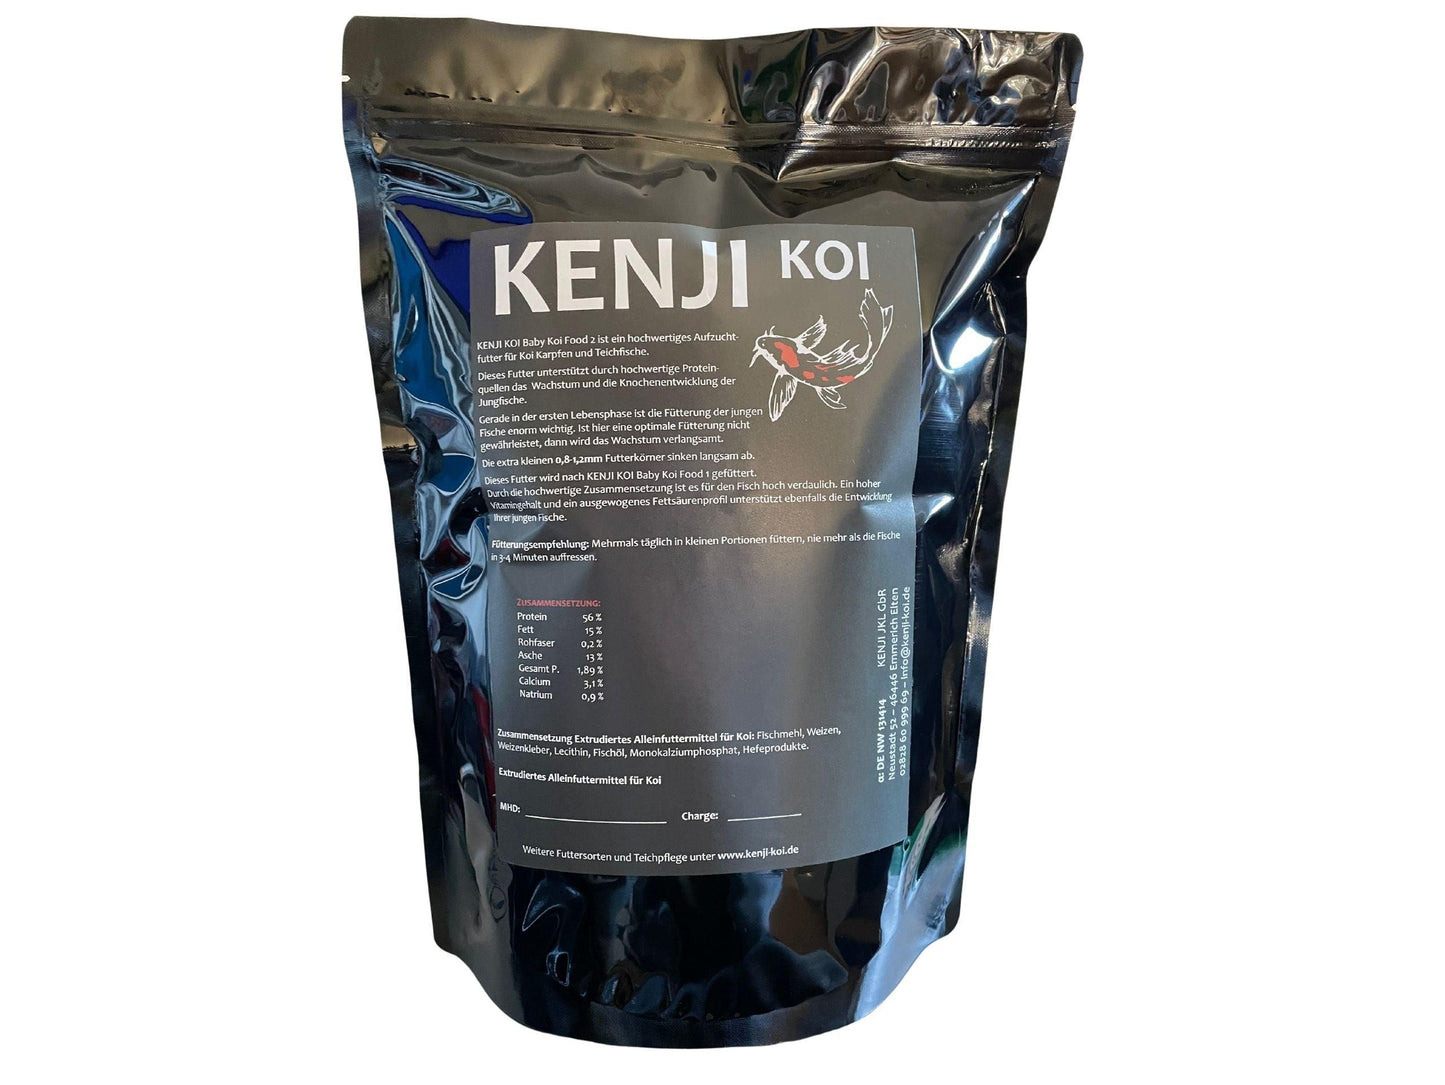 KENJI KOI Baby Koi Food 2 - 1 KG - KENJI KOI Products